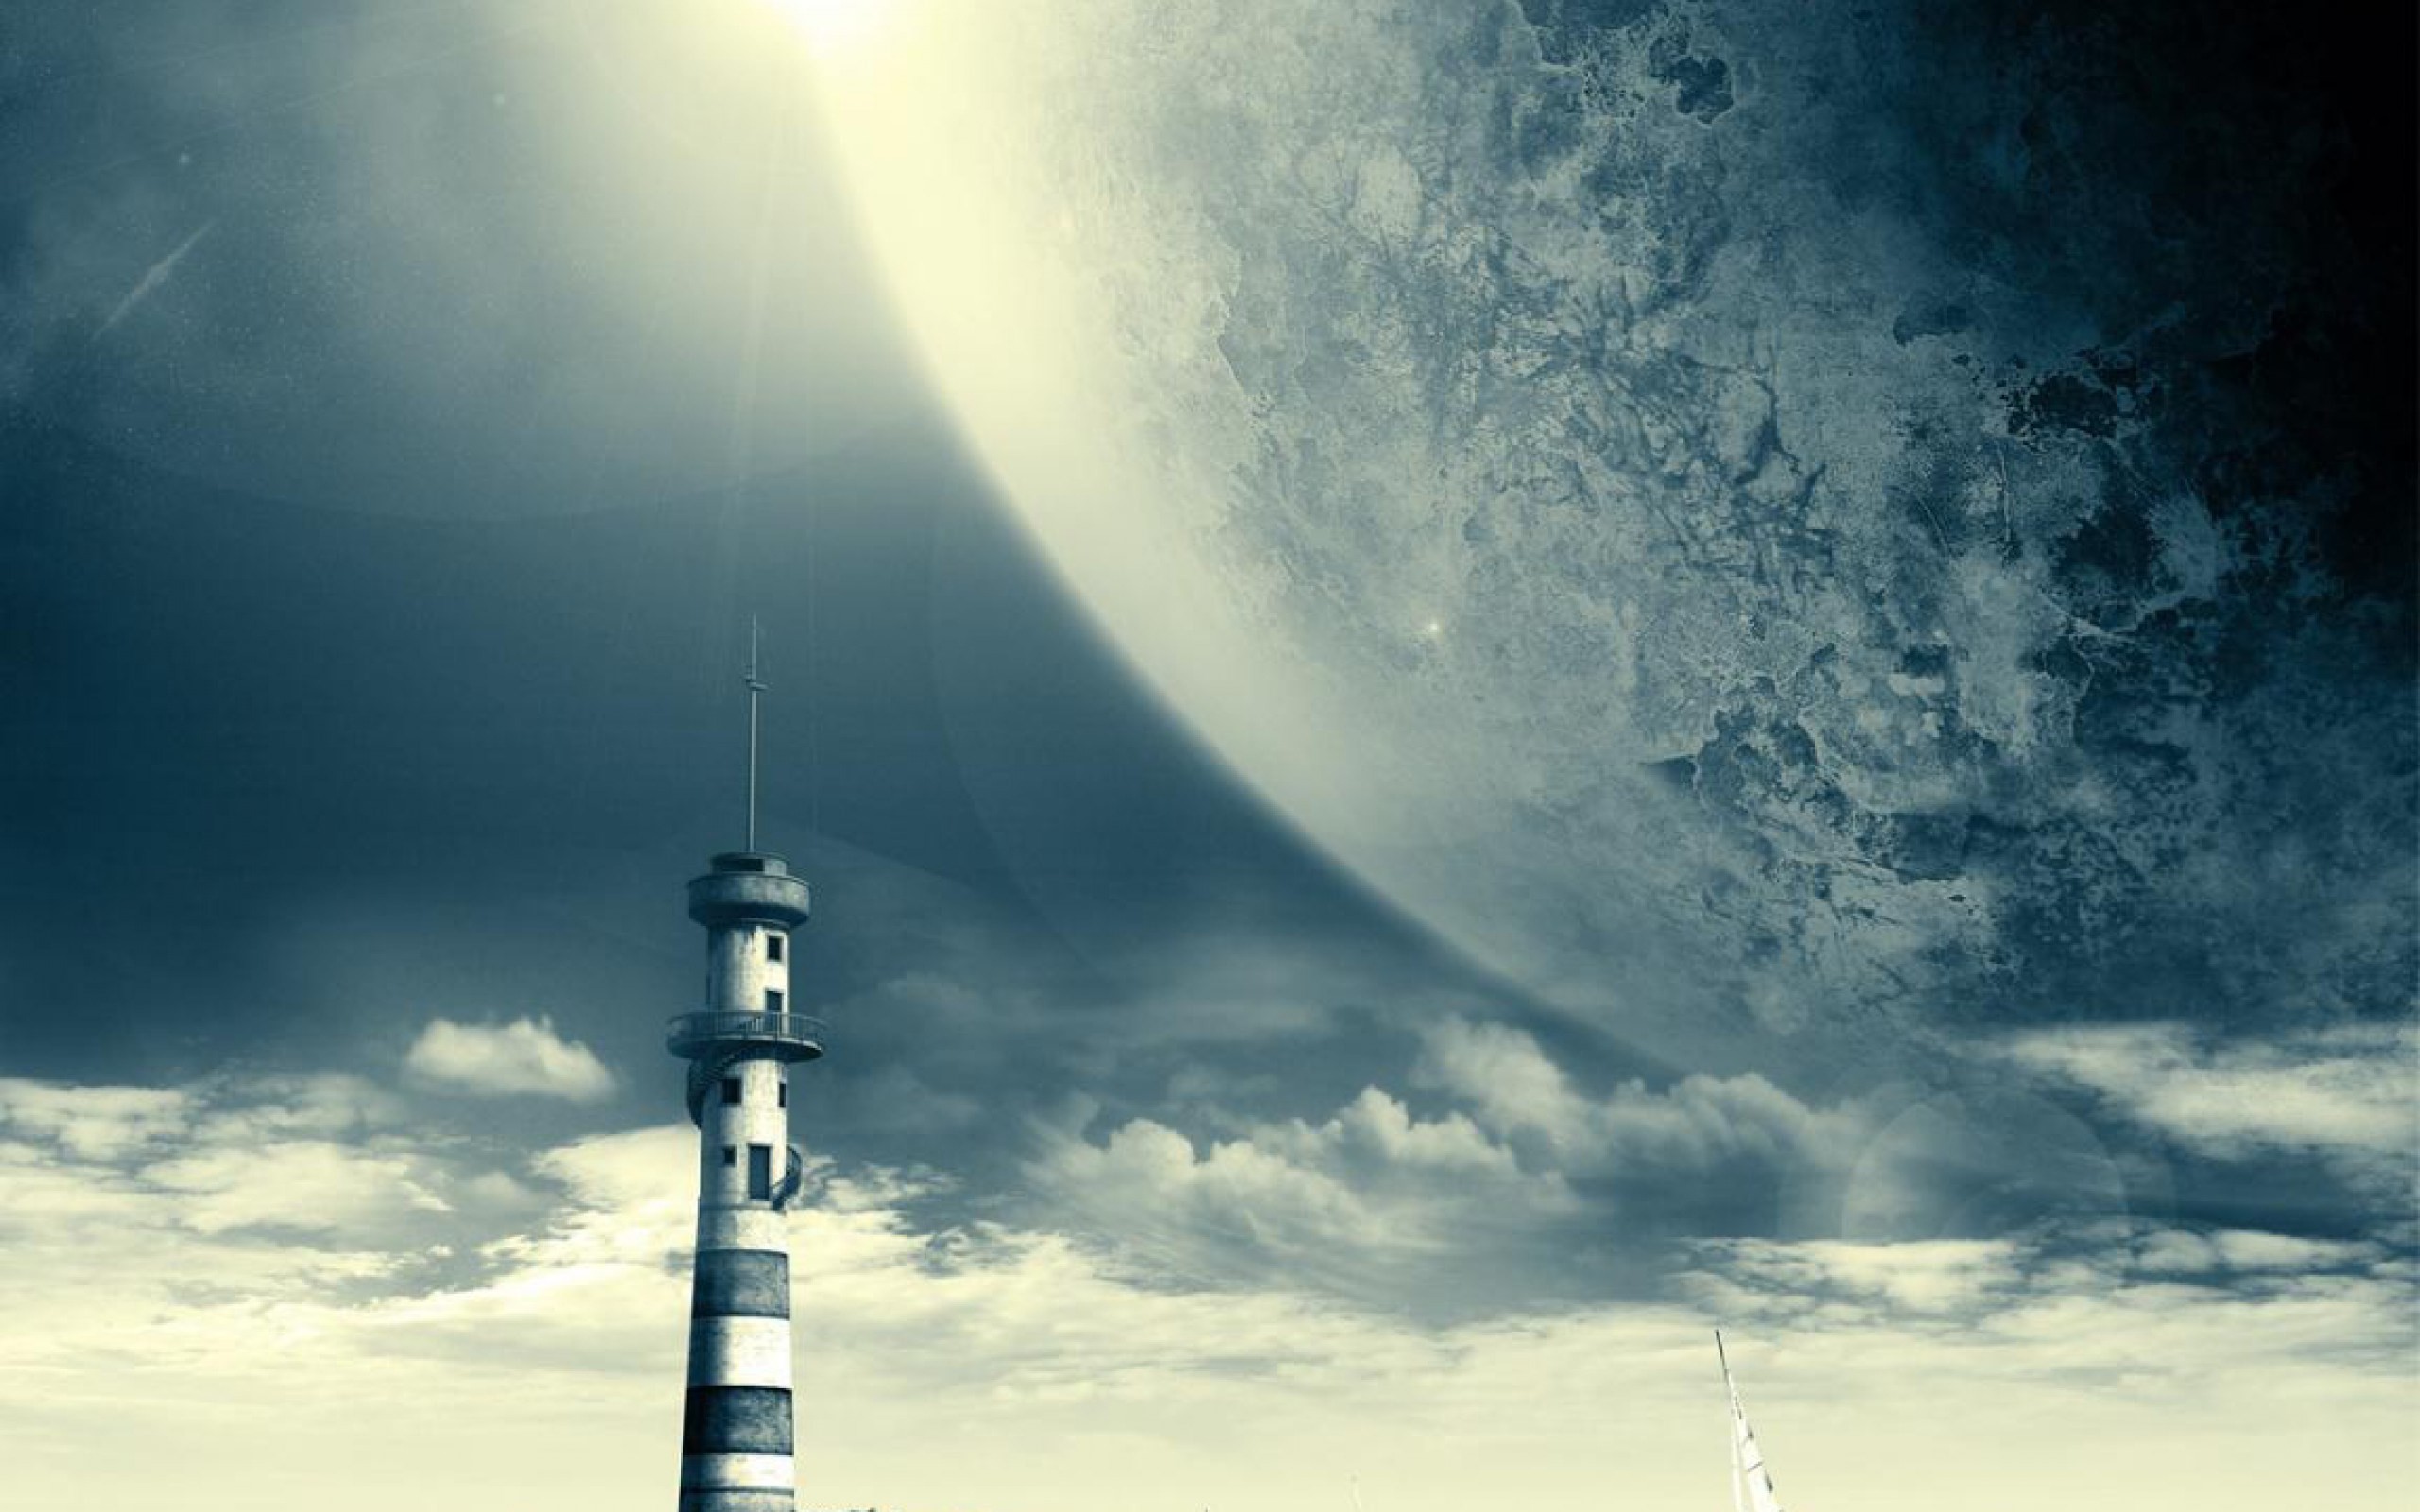 Lighthouse wallpaper for desktop background Aldwin Waite 2560×1600